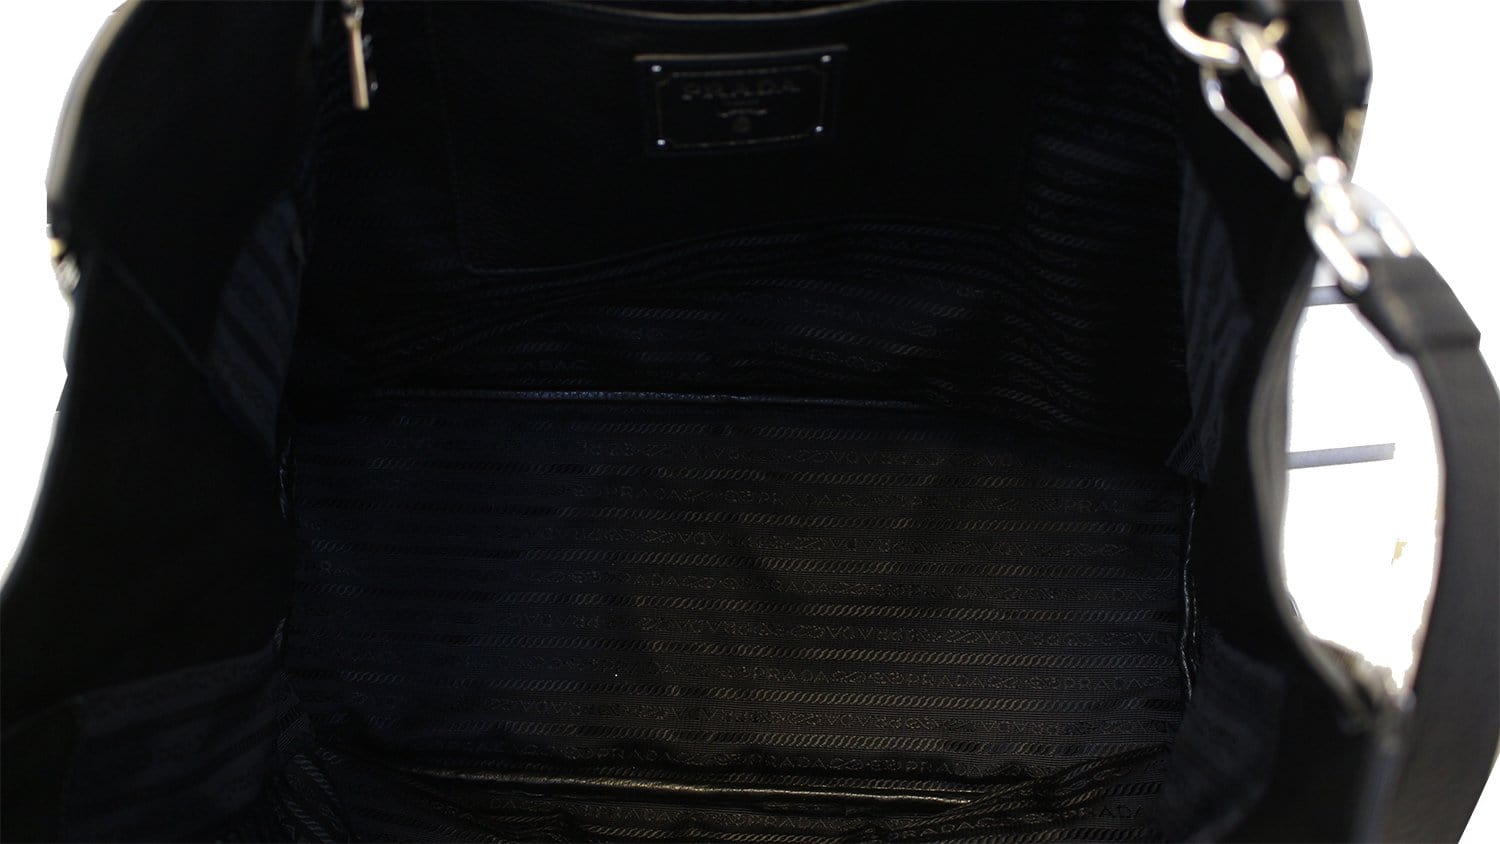 Shop PRADA PRADA Vitello Phenix Leather Adjustable Tote Bag by Grace.jp